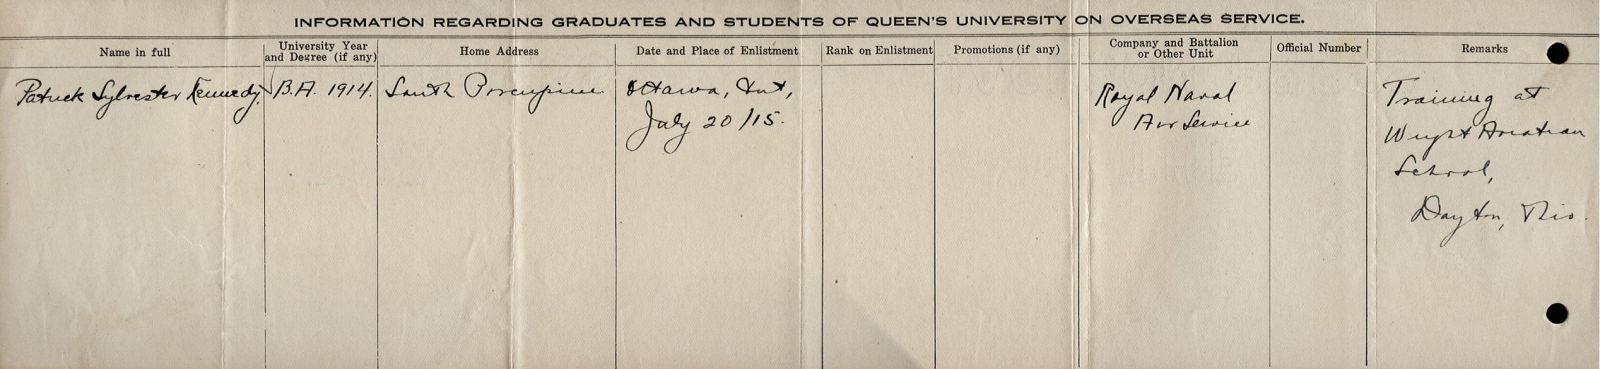 University Overseas Service Record of Kennedy